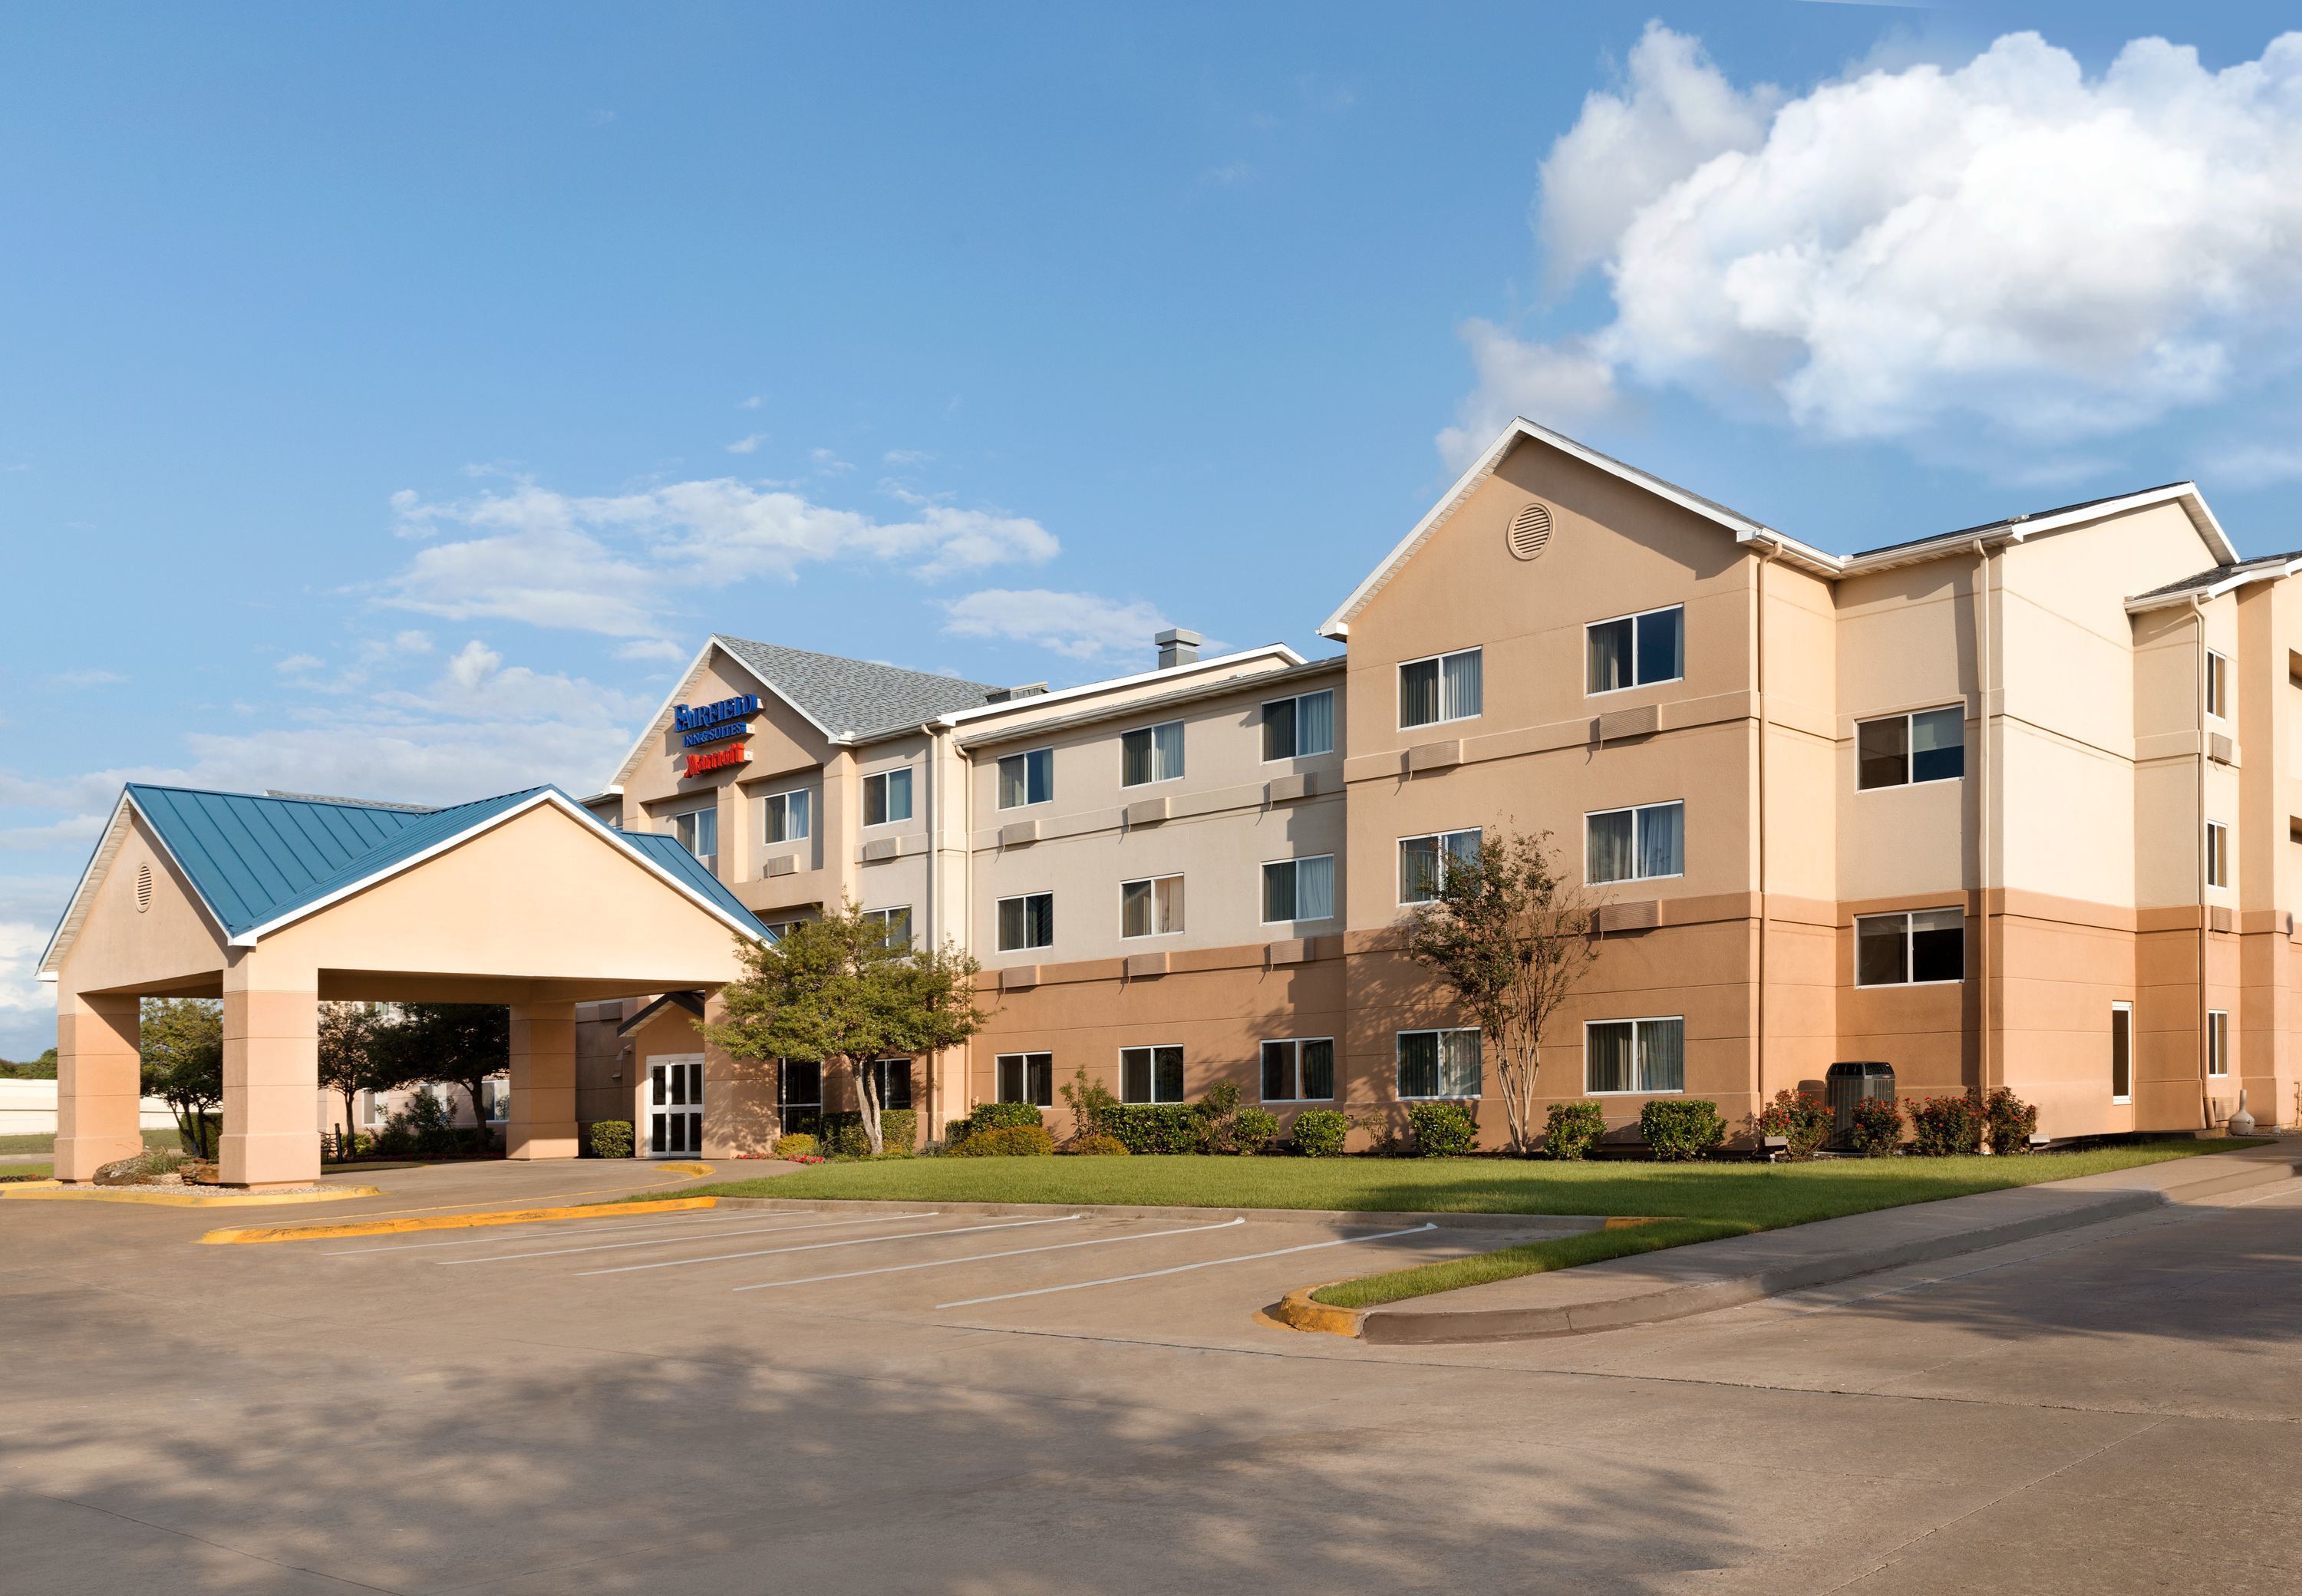 Photo of Fairfield Inn & Suites by Marriott Dallas Mesquite, Mesquite, TX